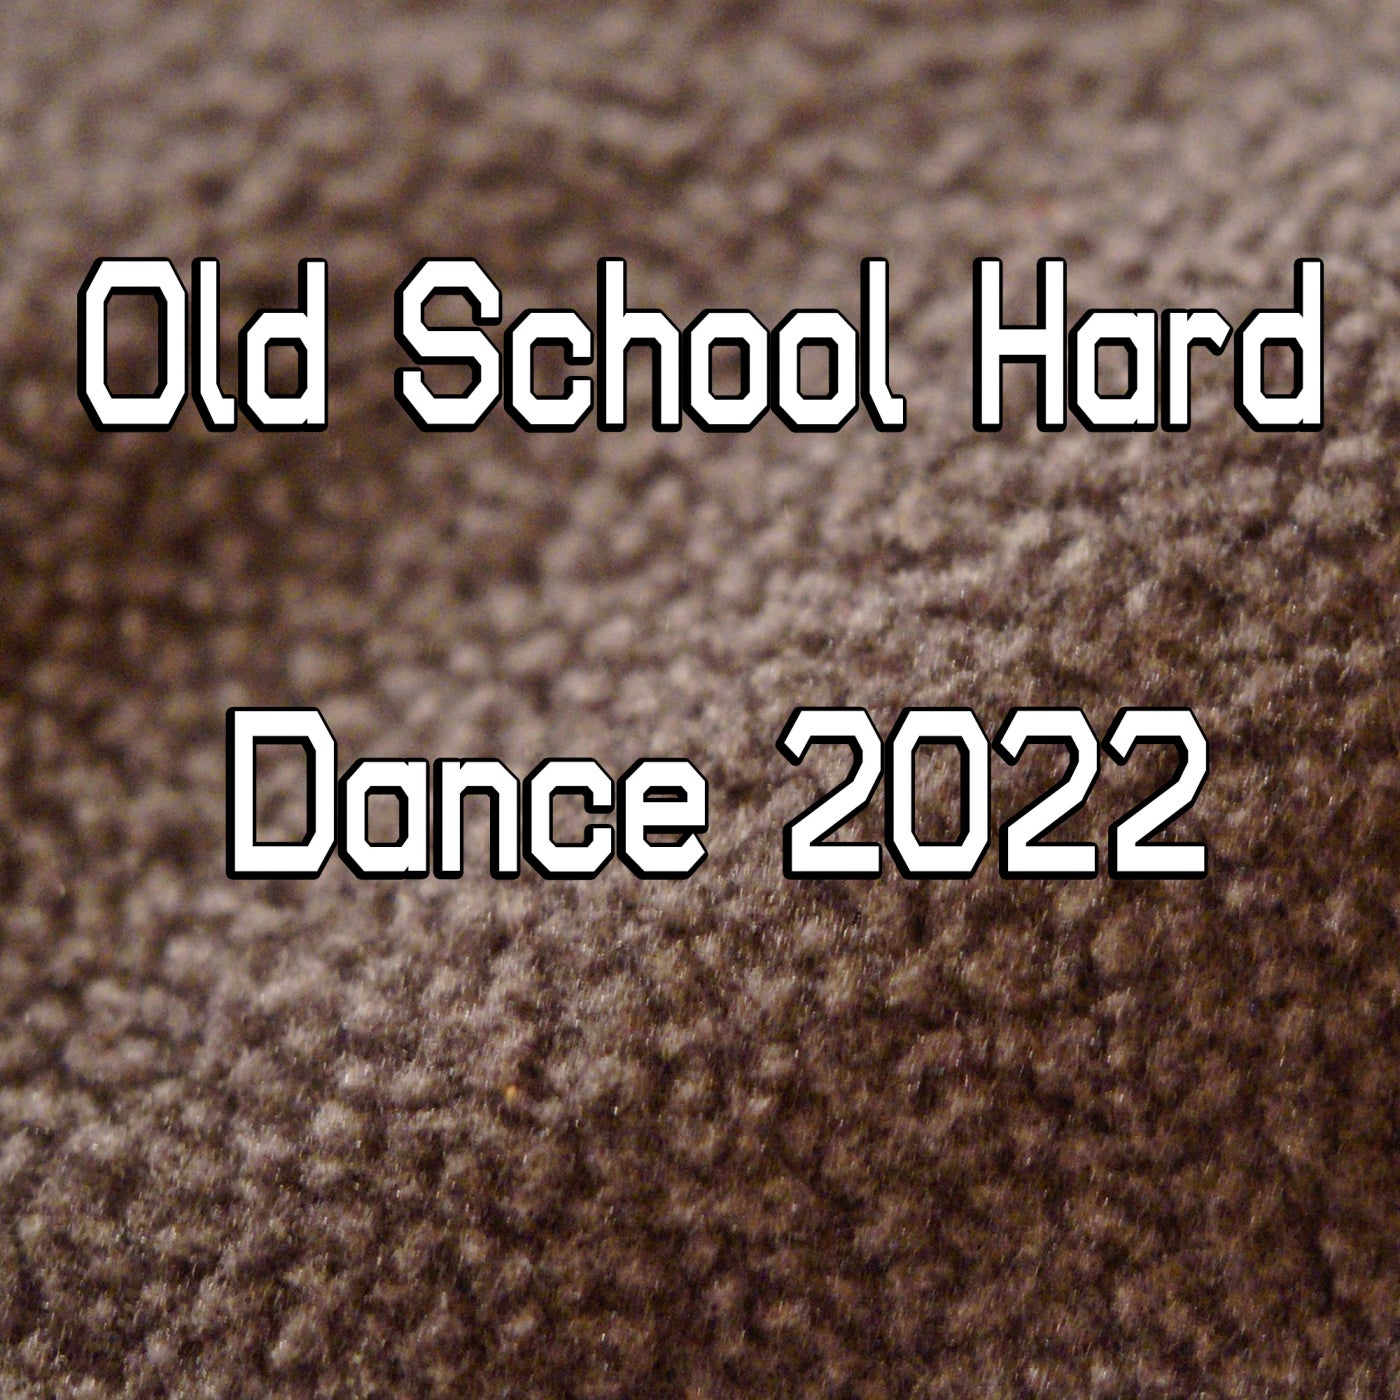 Old School Hard Dance 2022